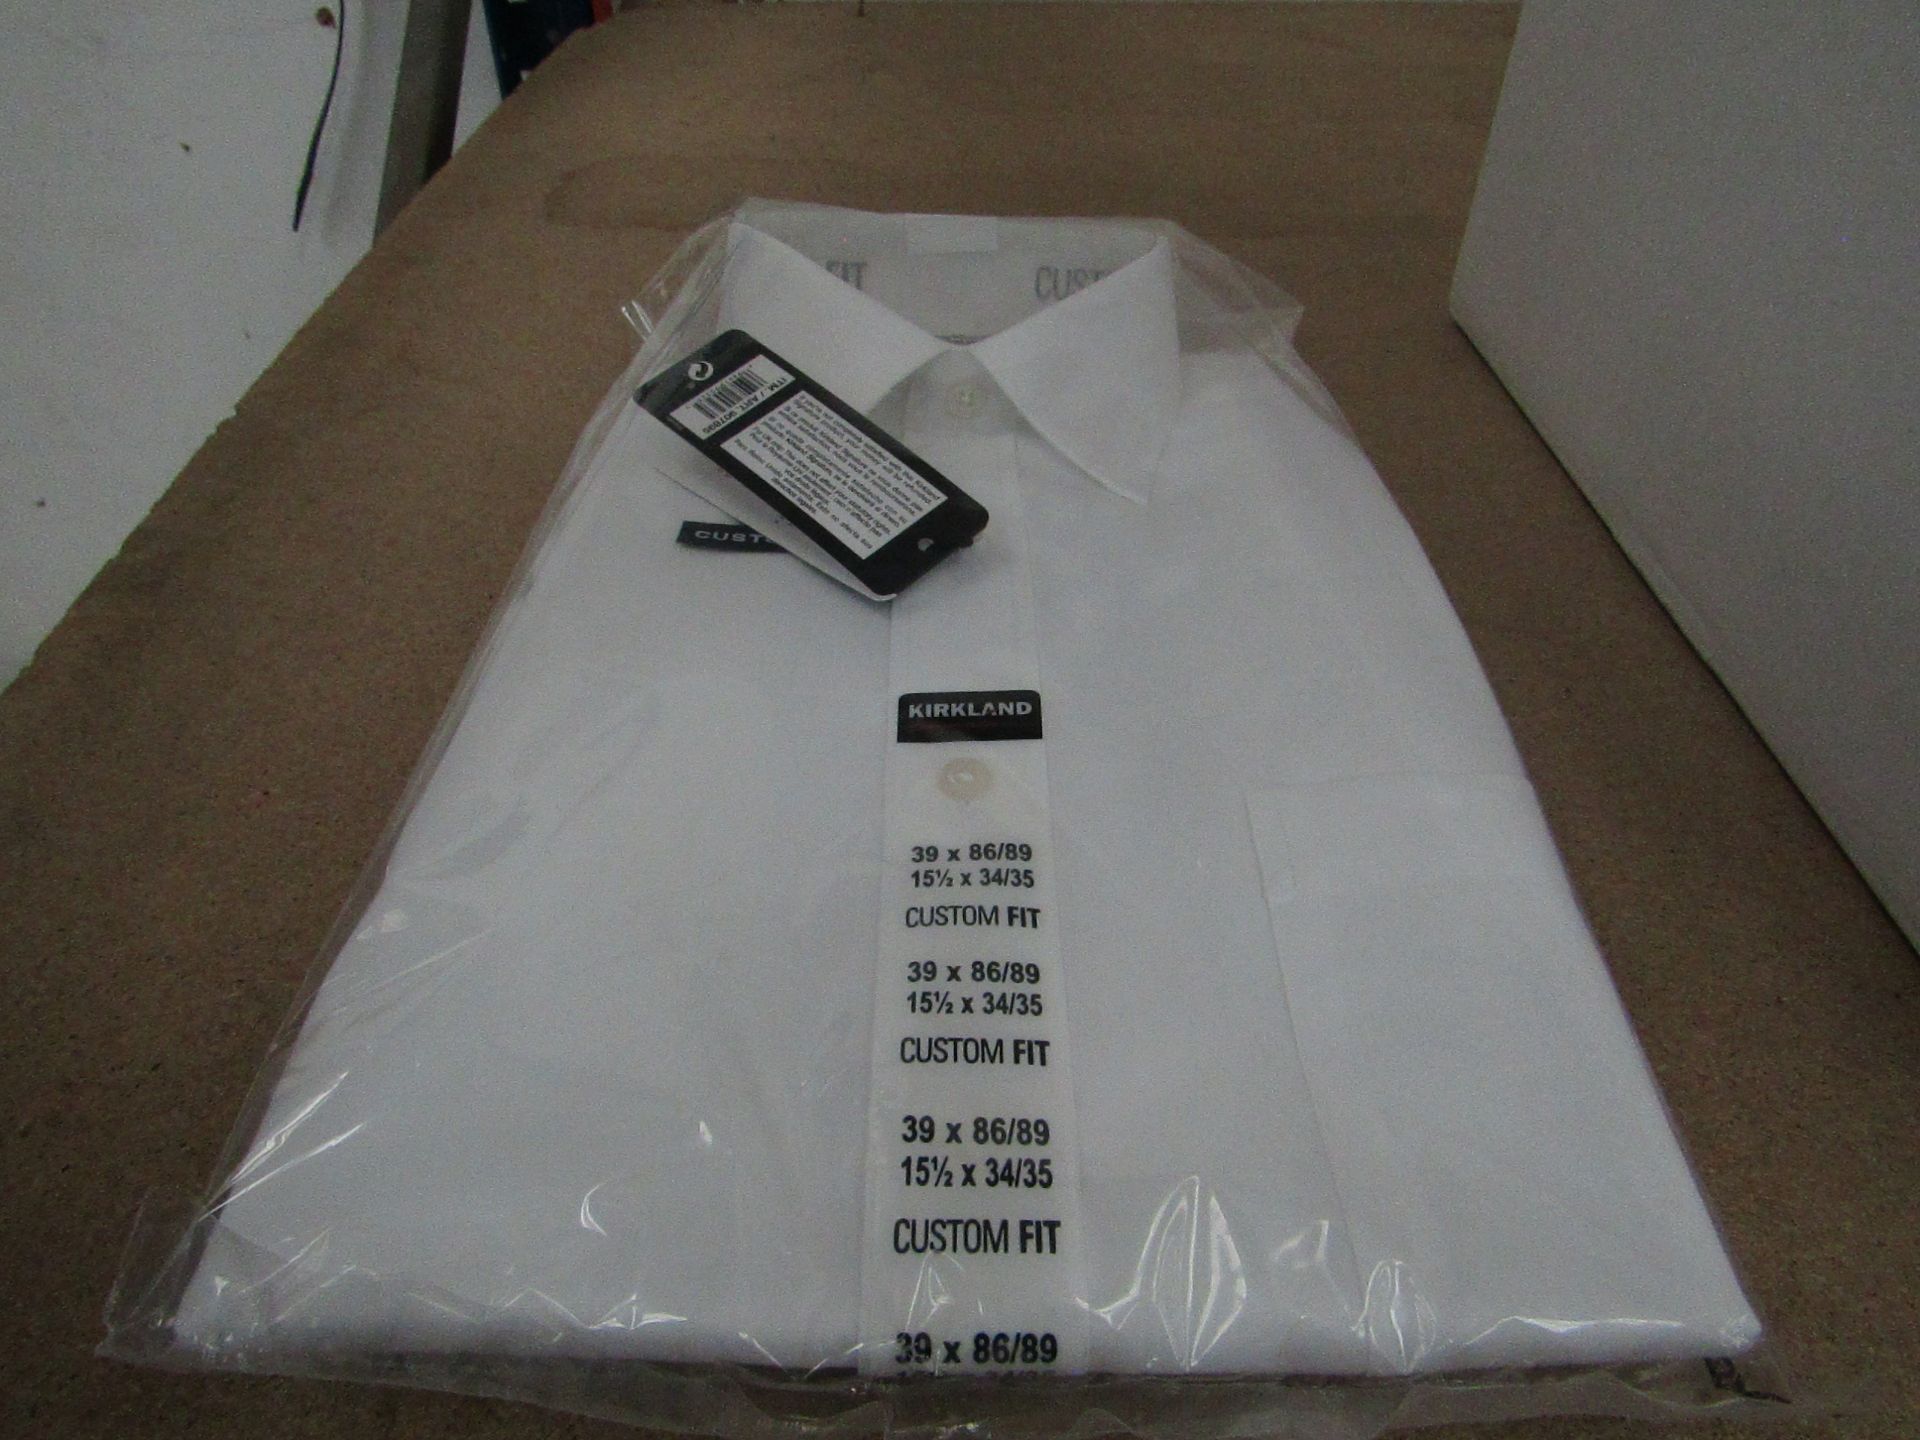 Kirkland - Custom Fit White Buttoned Shirt - ( 39 x 86/89 - 15.5 x 34/35 ) - New & Packaged.